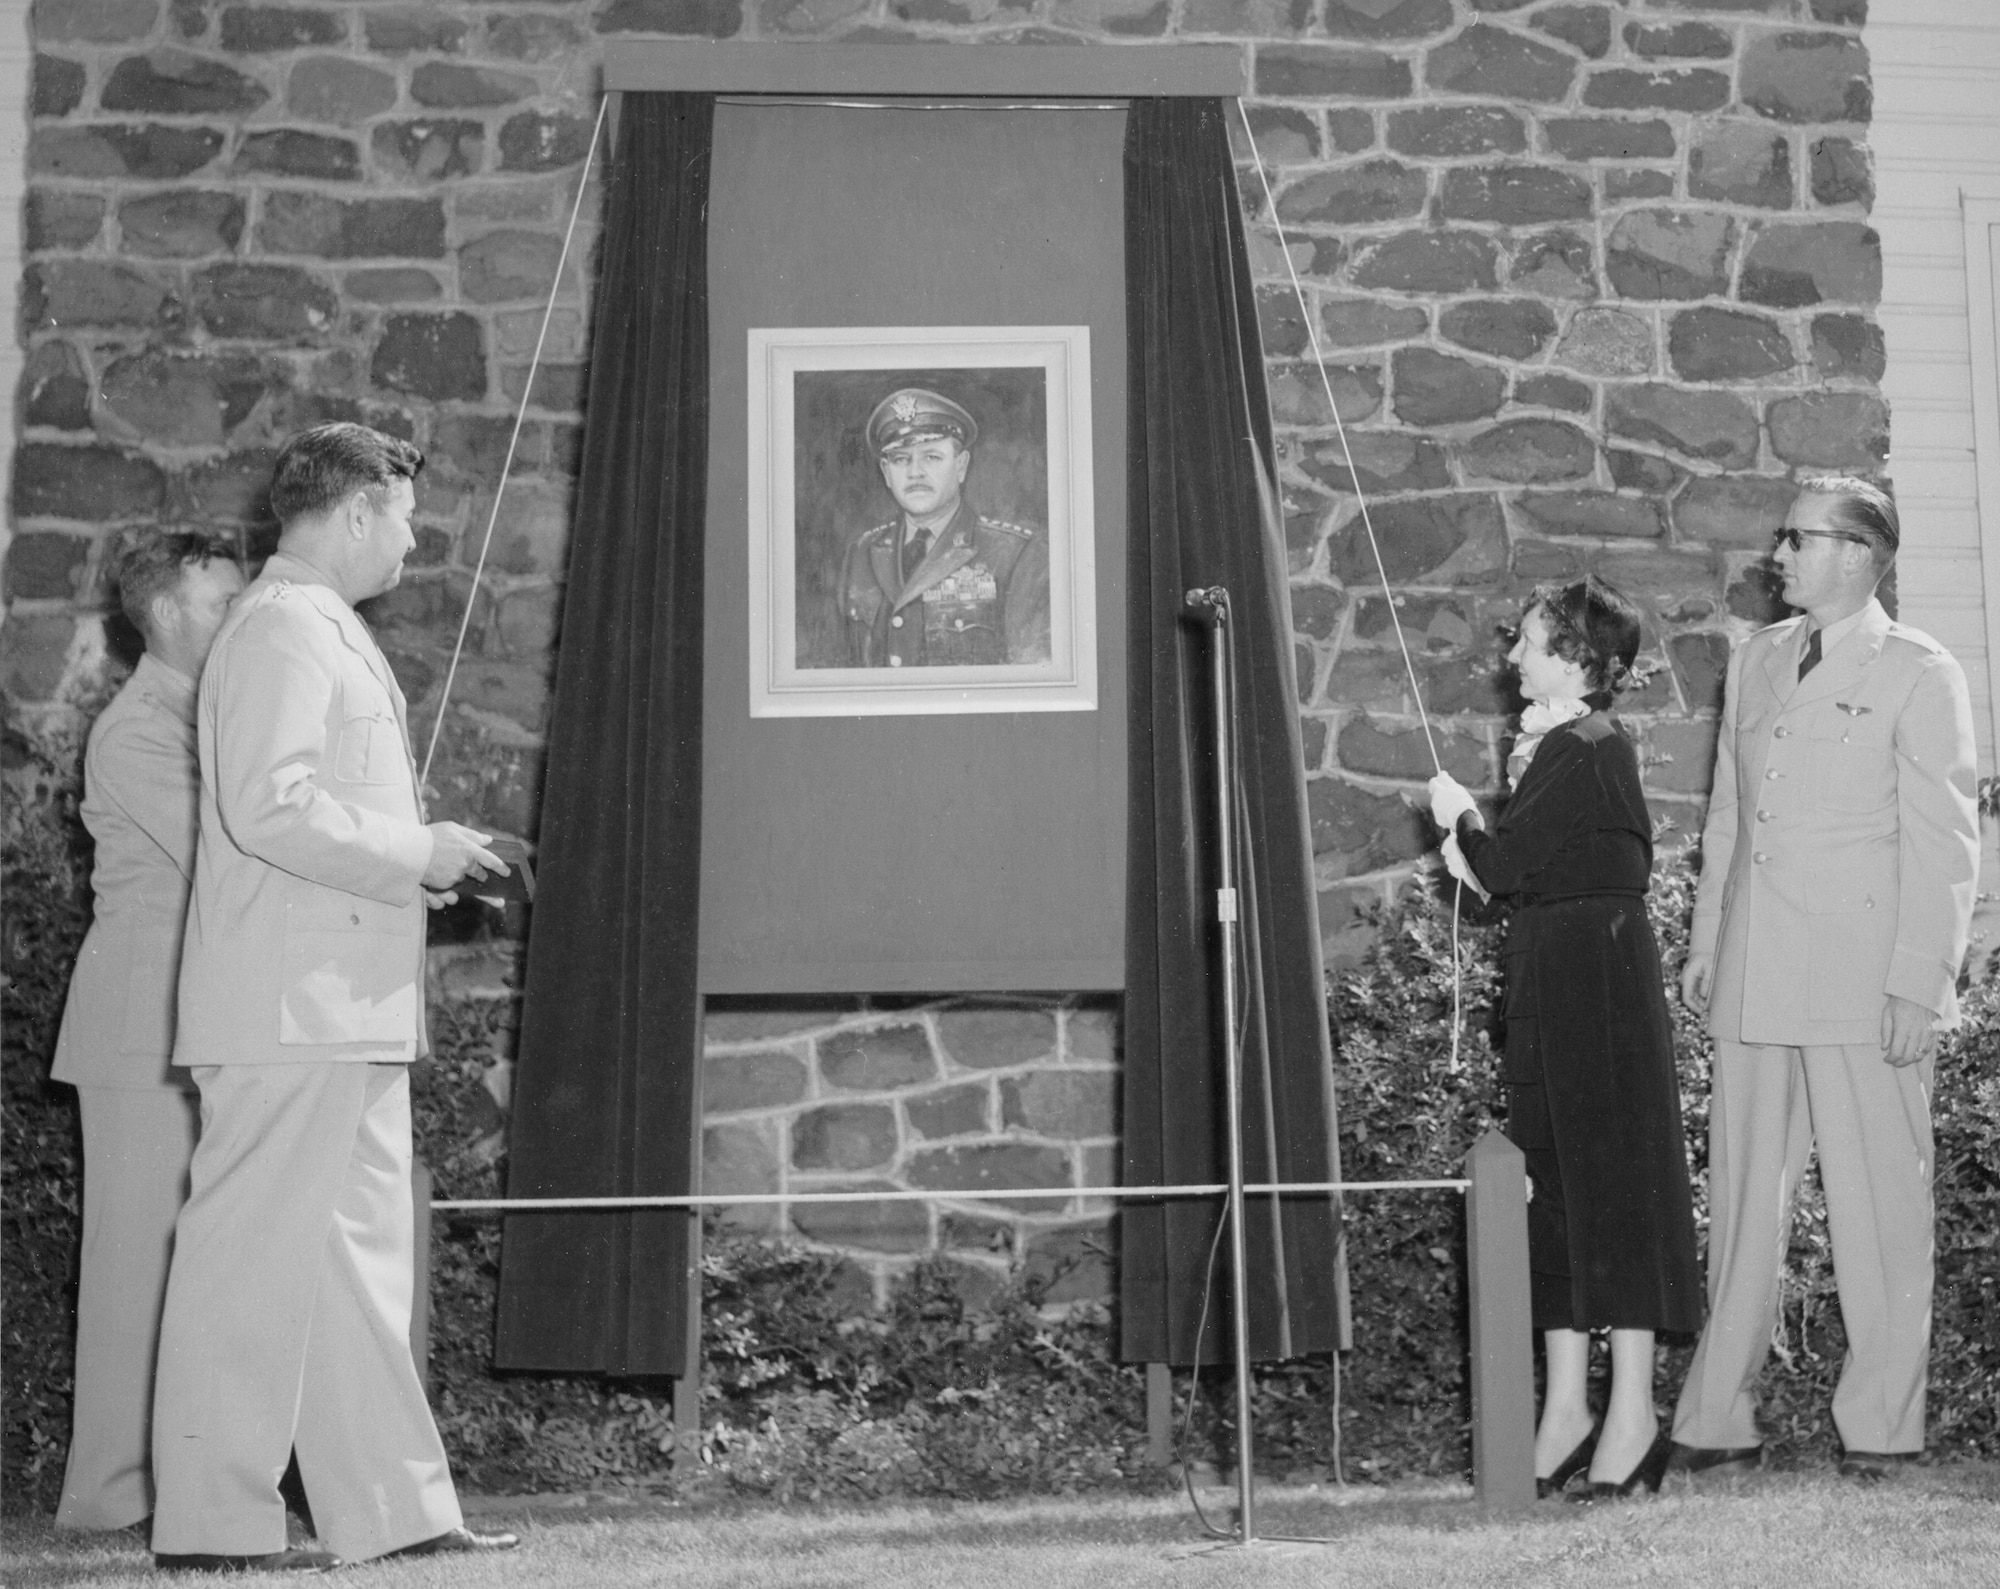 Gen. C. J. Bondley Jr., 57th Air Division Commander,  Lt. Gen. Curtis E. LeMay,  Mrs. Fairchild, Lt. McGanoy, Assistant Club Officer unveil a portrait of Gen. Muir S. Fairchild, Vice Chief of Staff of the Air Force. Fairchild Air Force Base was named after Gen. Fairchild. (Historical photo)